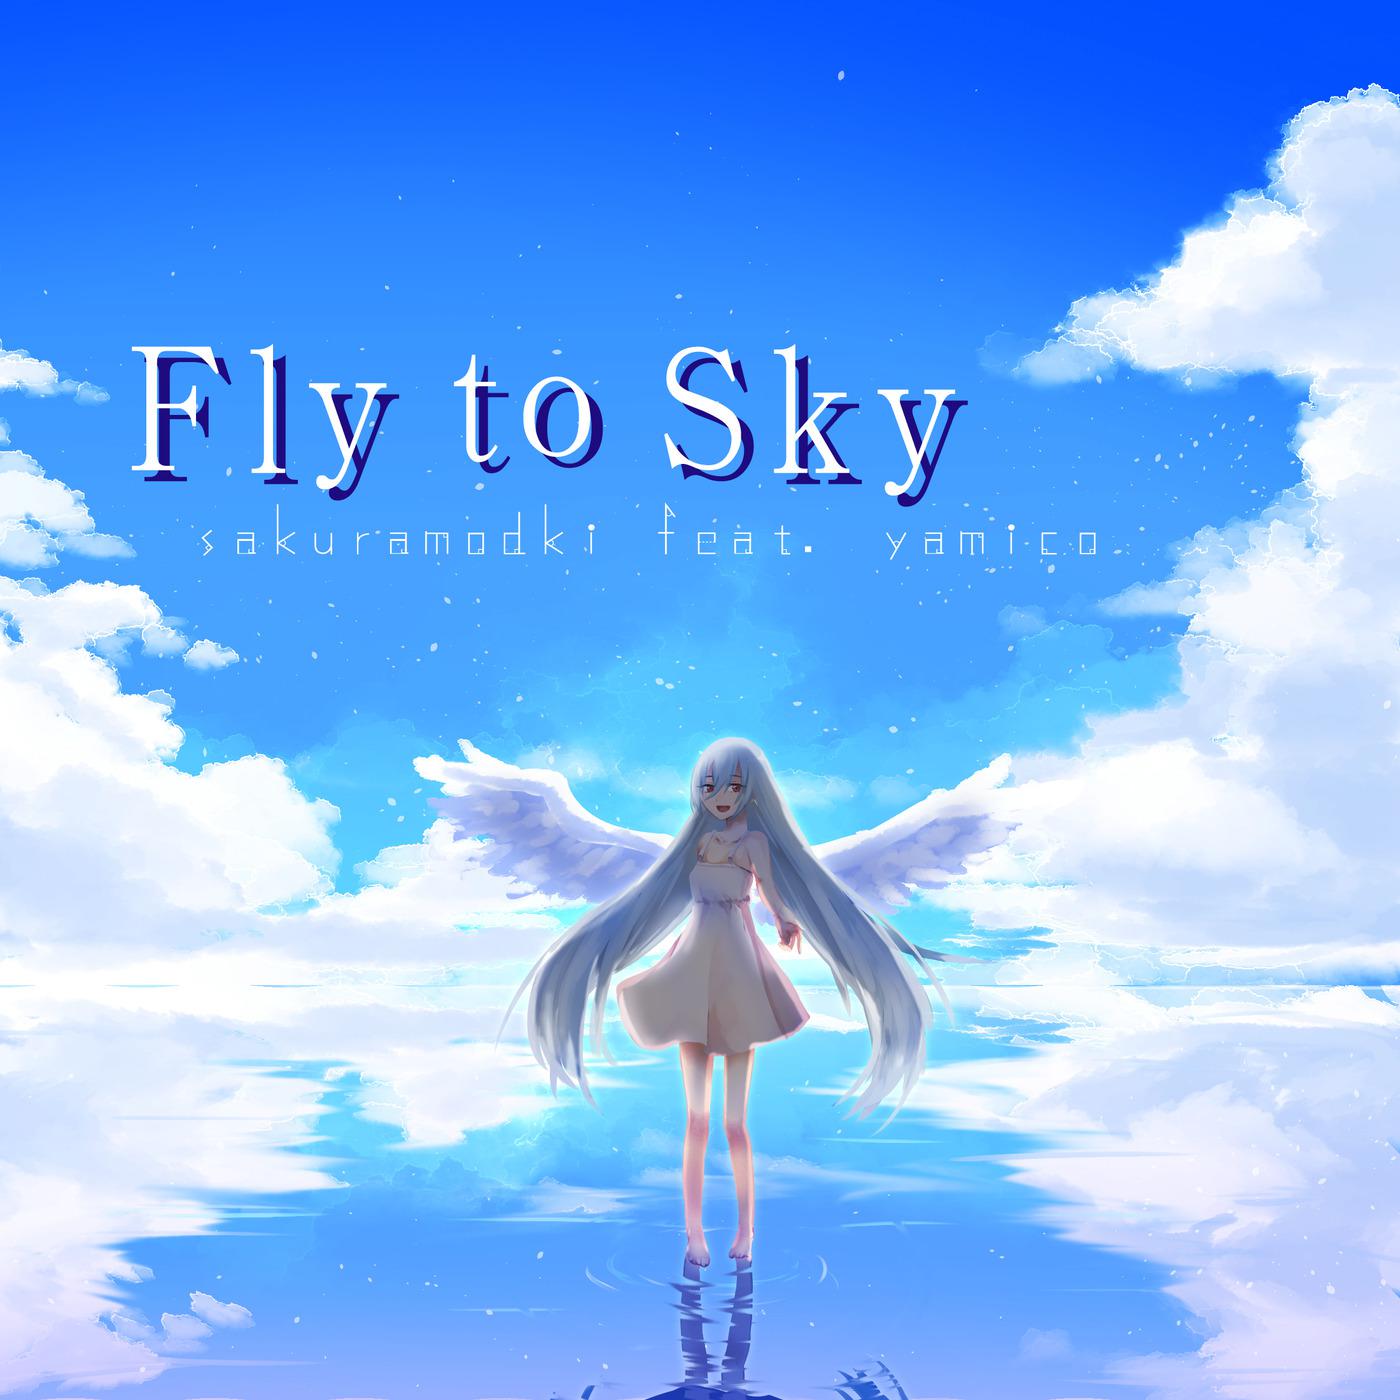 歌曲名《Fly to Sky》，由 Sakuramodki、yamico 演唱，收录于《Fly to Sky》专辑中.